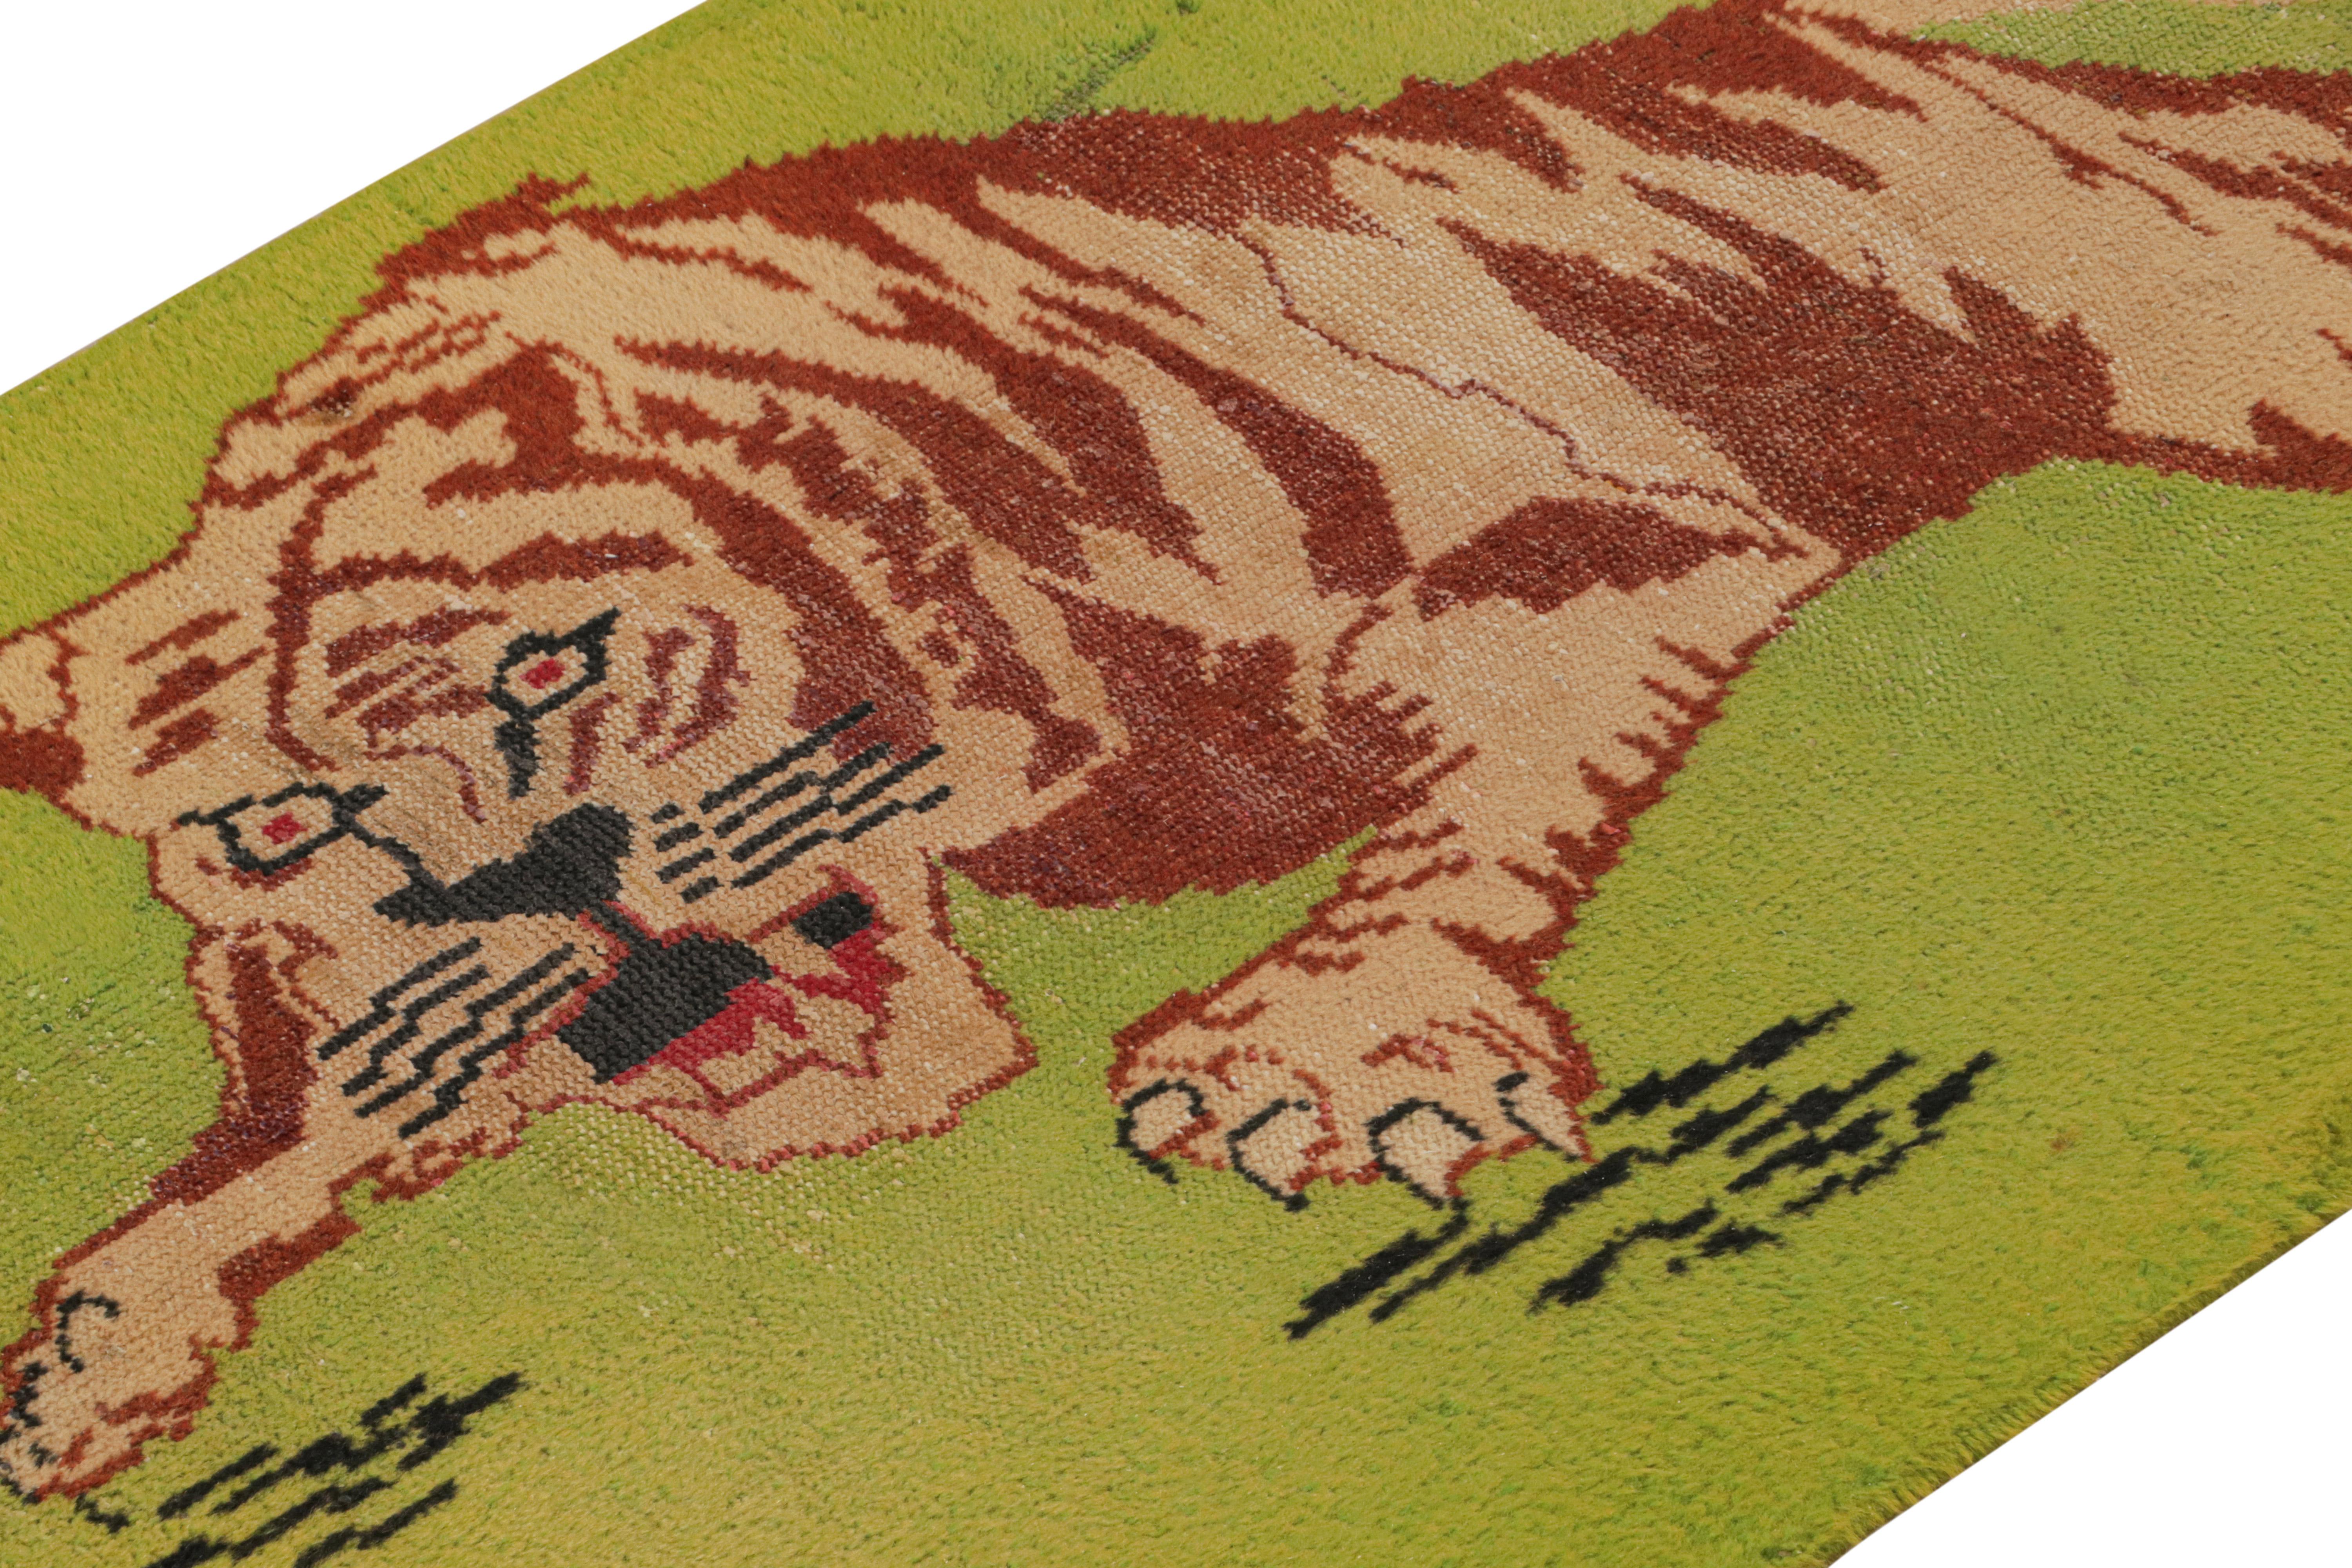 Hand-Knotted Vintage Zeki Müren Rug in Green with Beige-Brown Tiger Pictorial by Rug & Kilim For Sale